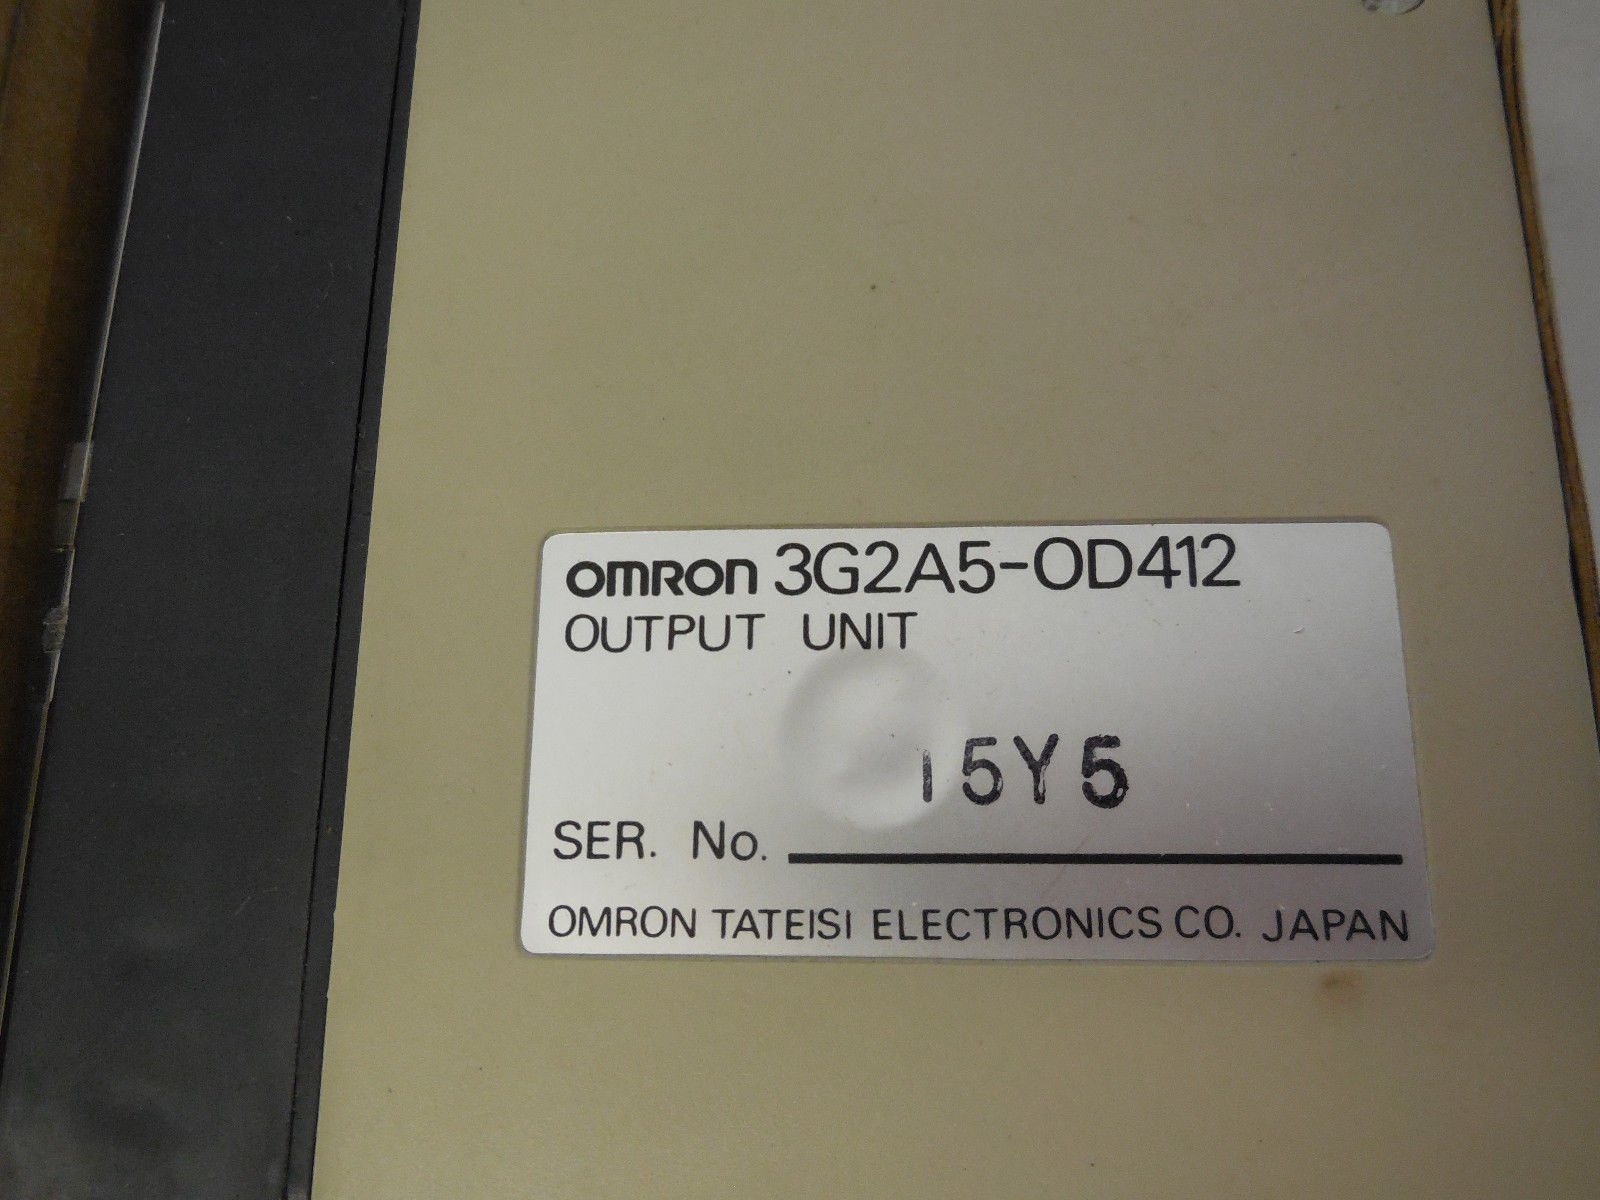 OMRON C500-OD412/C500OD412 Output